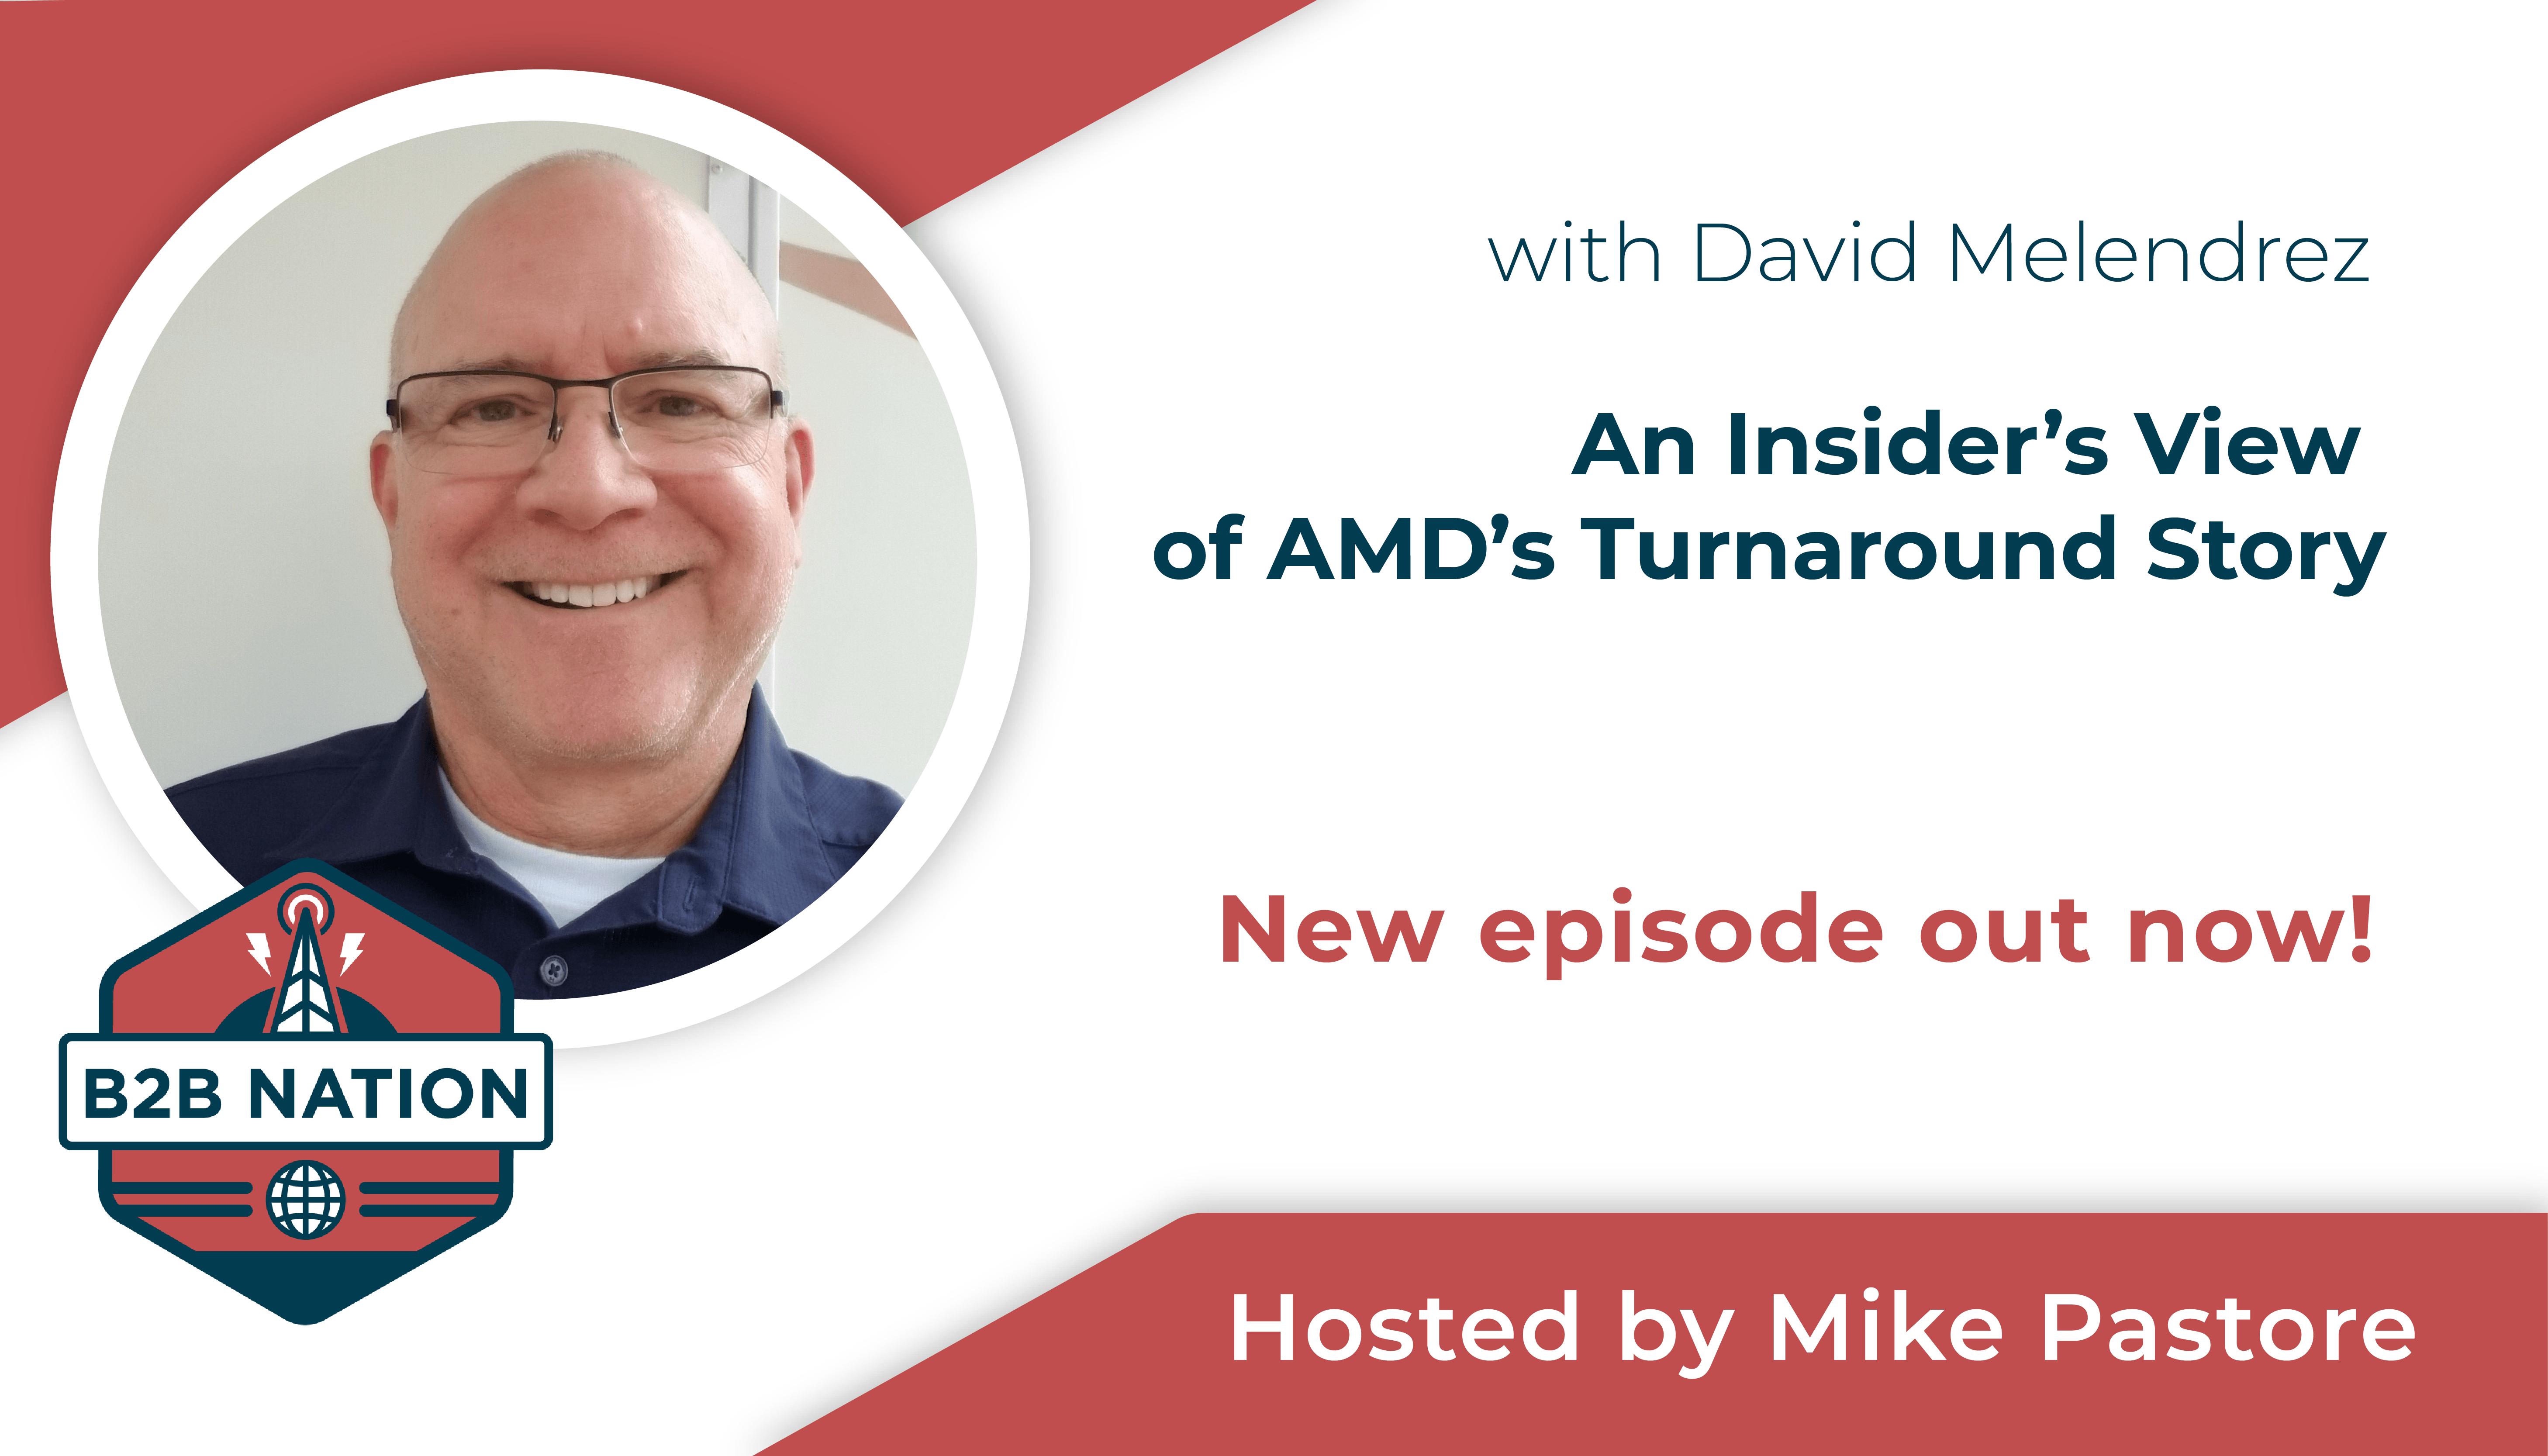 David Melendrez shares his story of AMD's turnaround on B2B Nation.